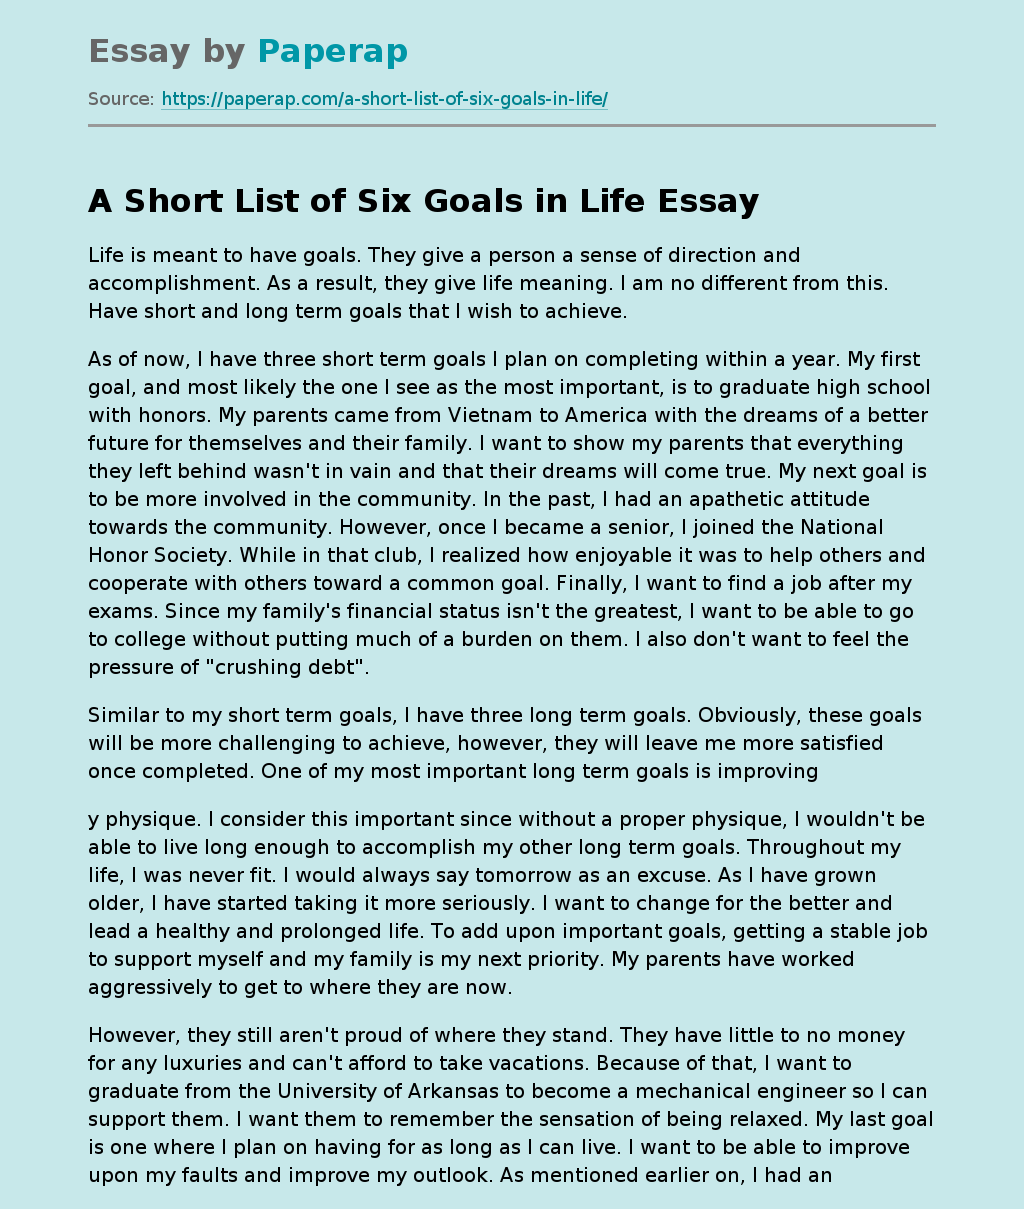 A Short List of Six Goals in Life